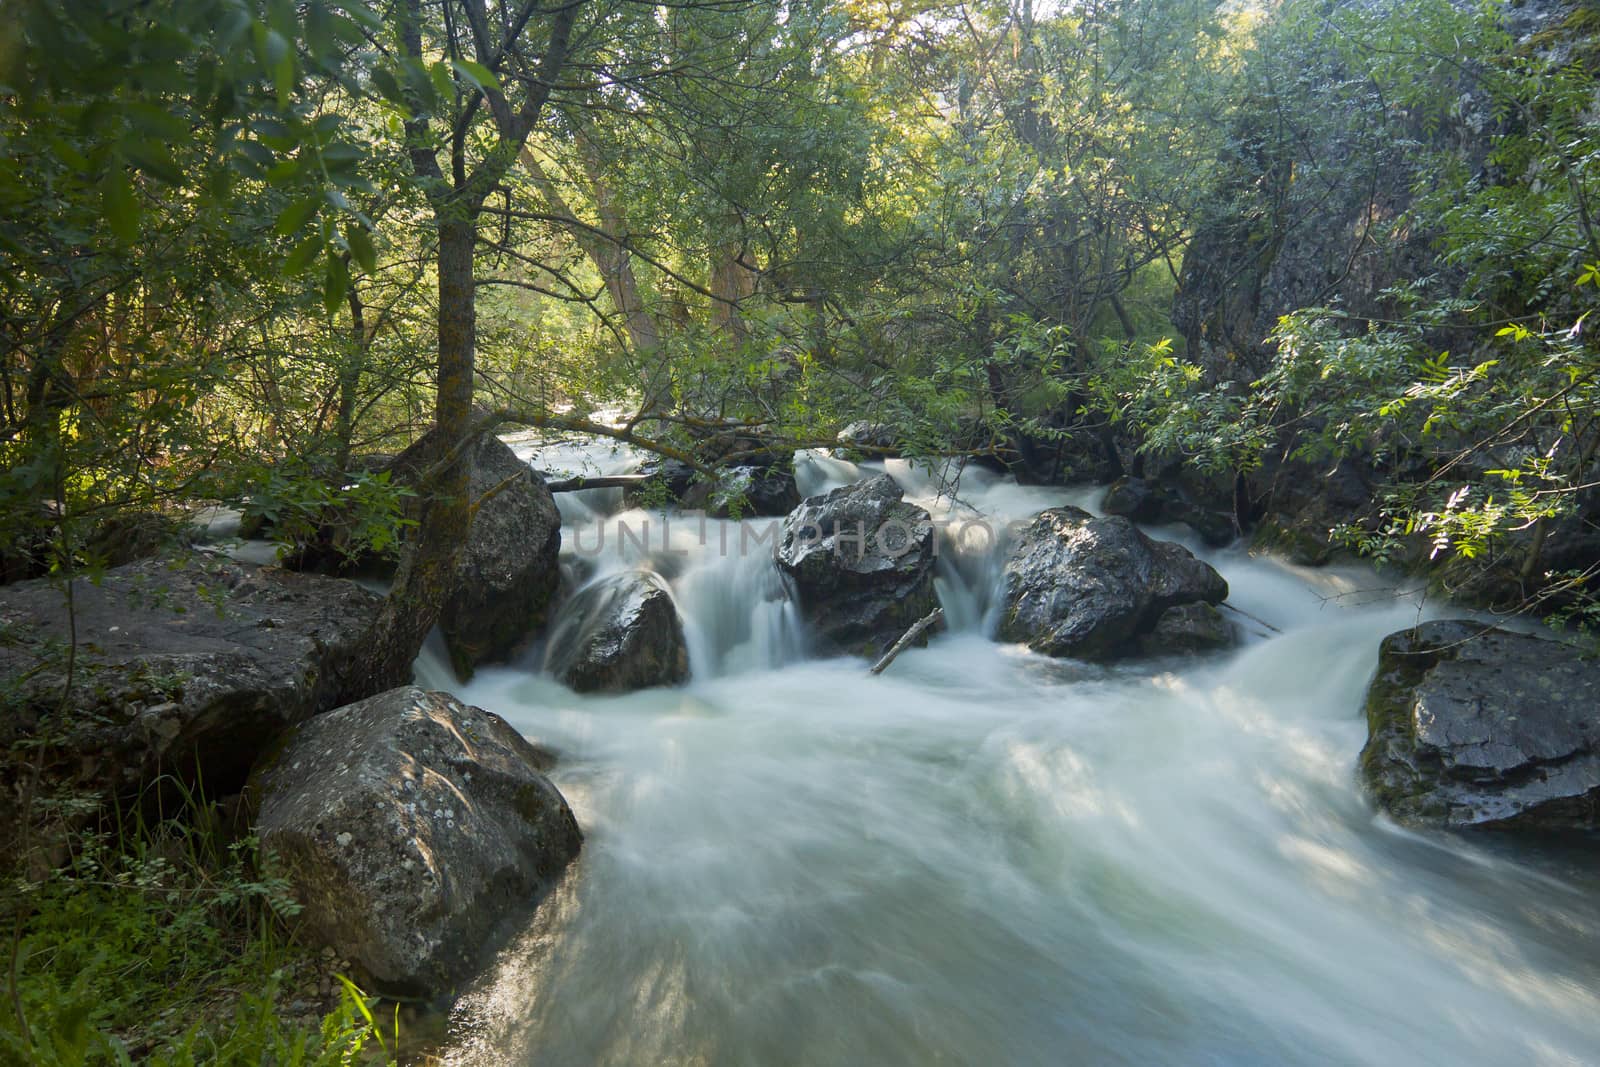 River Dulce stream with rocks in Guadalajara, Spain